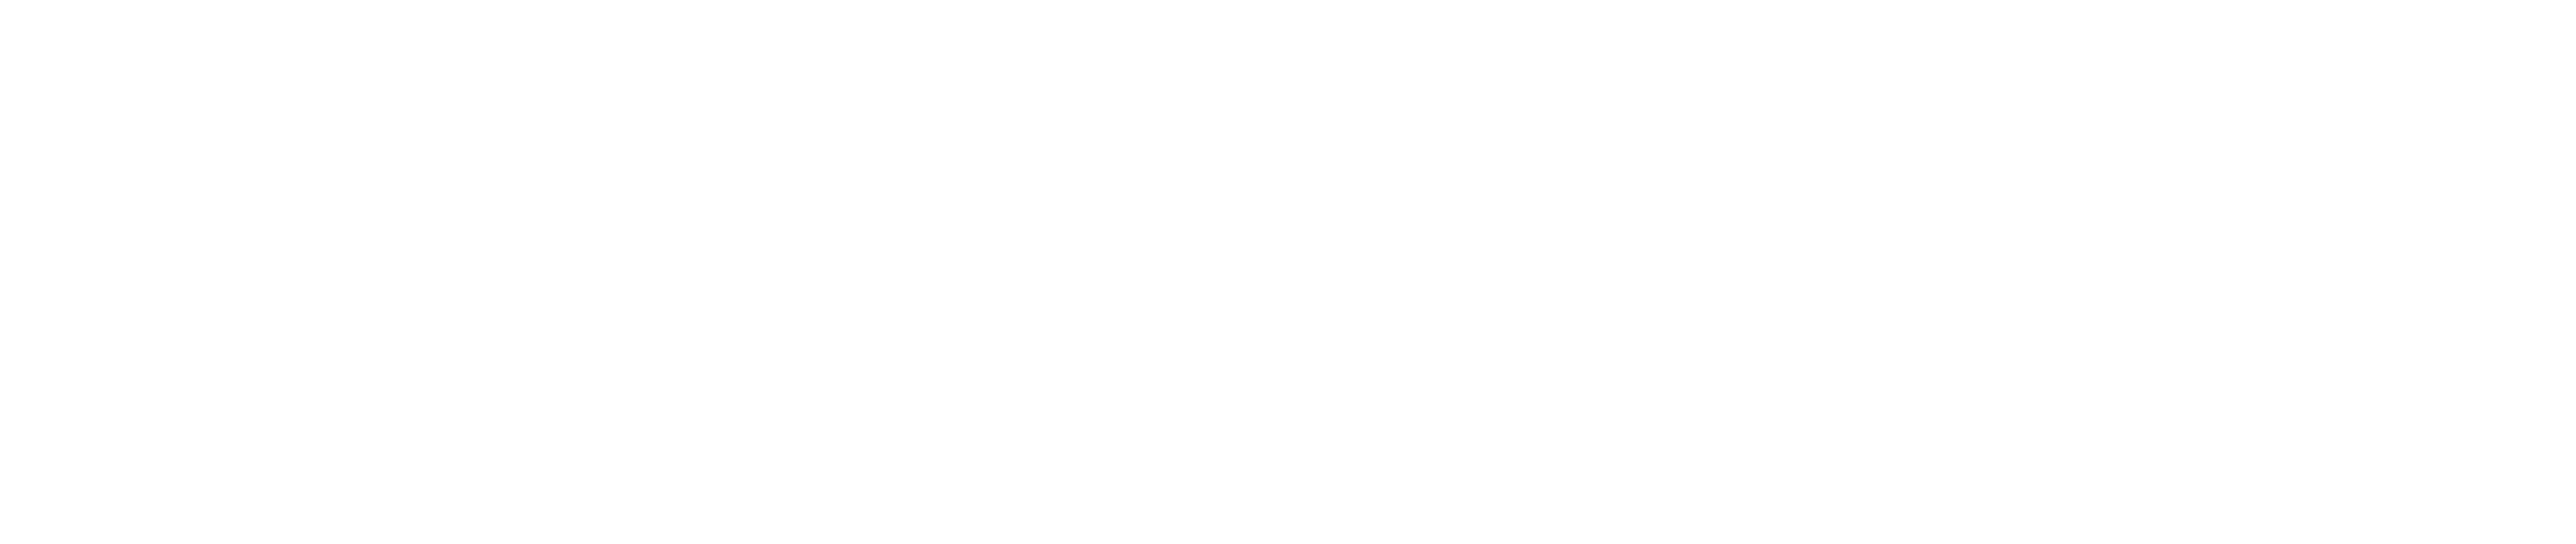 Rolls-Royce Corporate Store footer logo